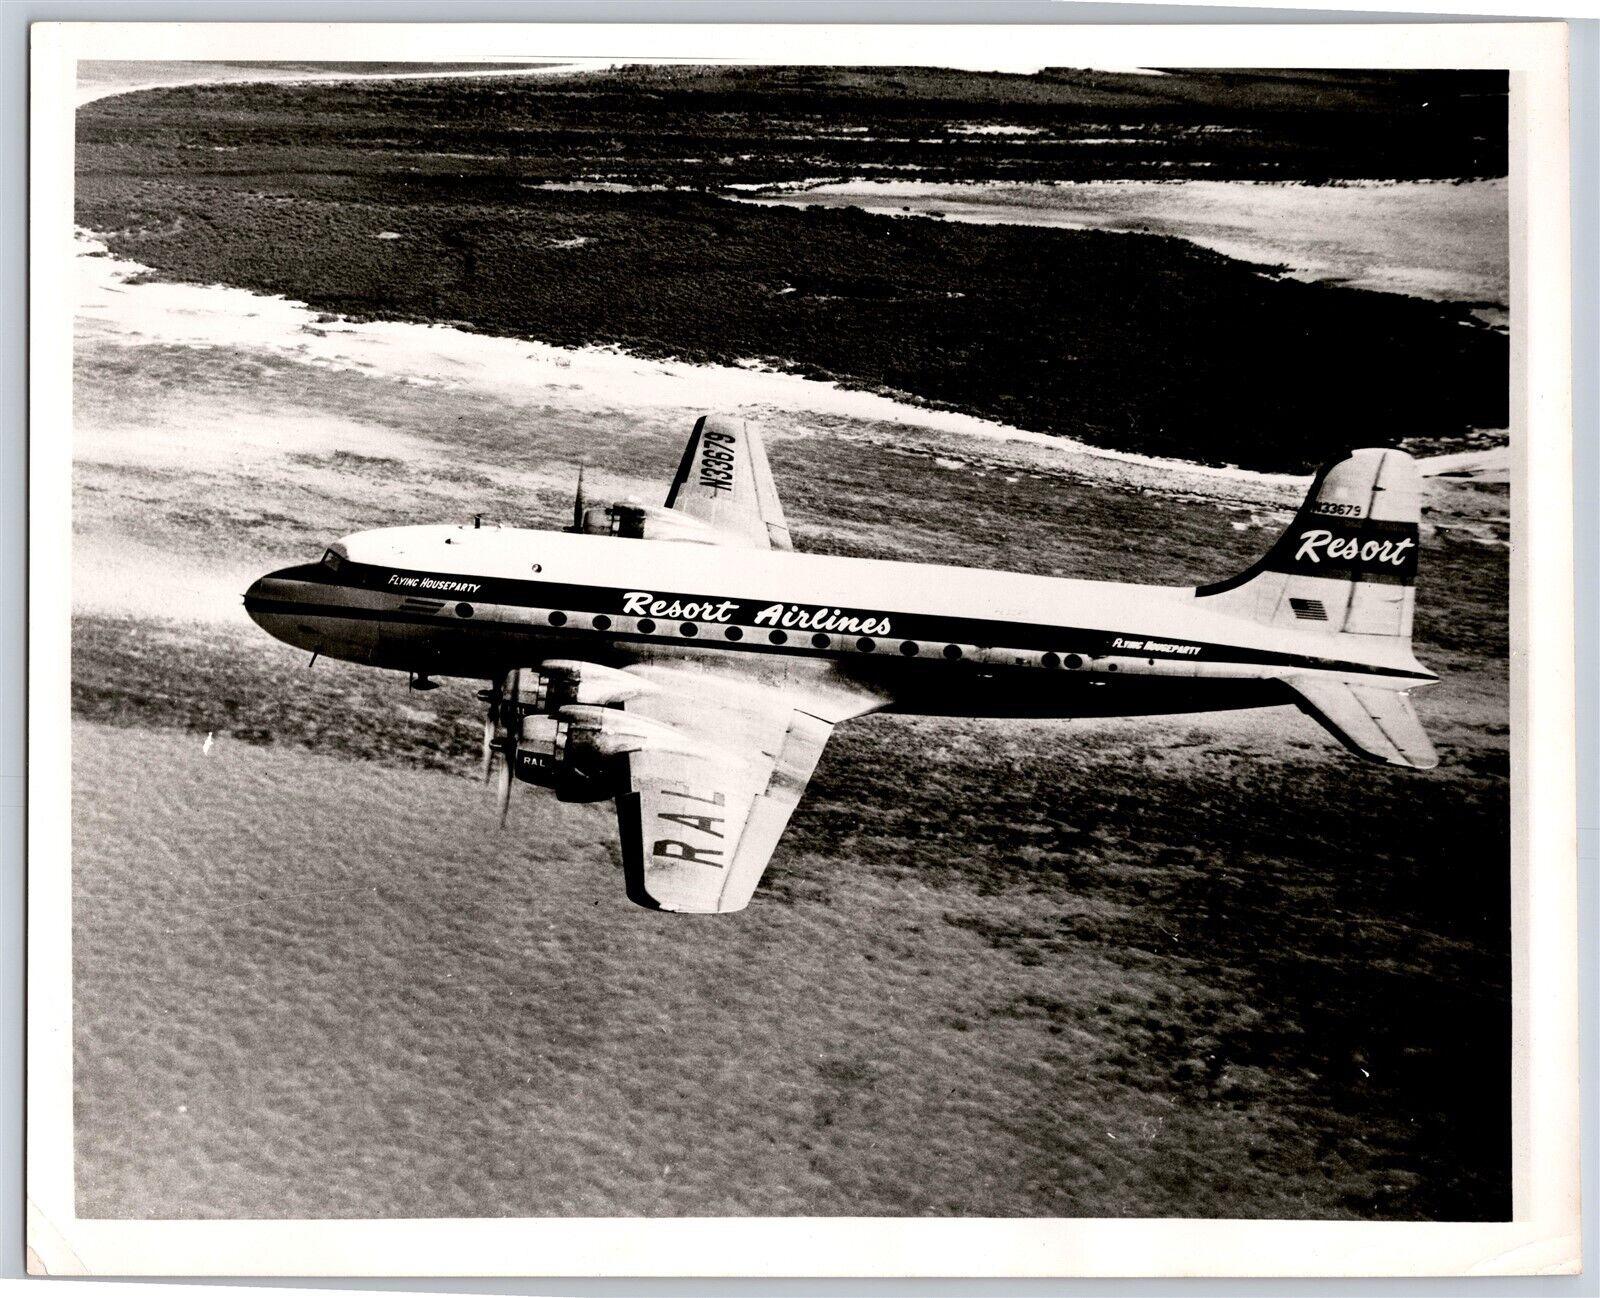 Airplane Resort Airlines Douglas DC-4 N33679 In Flight B&W 8x10 Photo B2